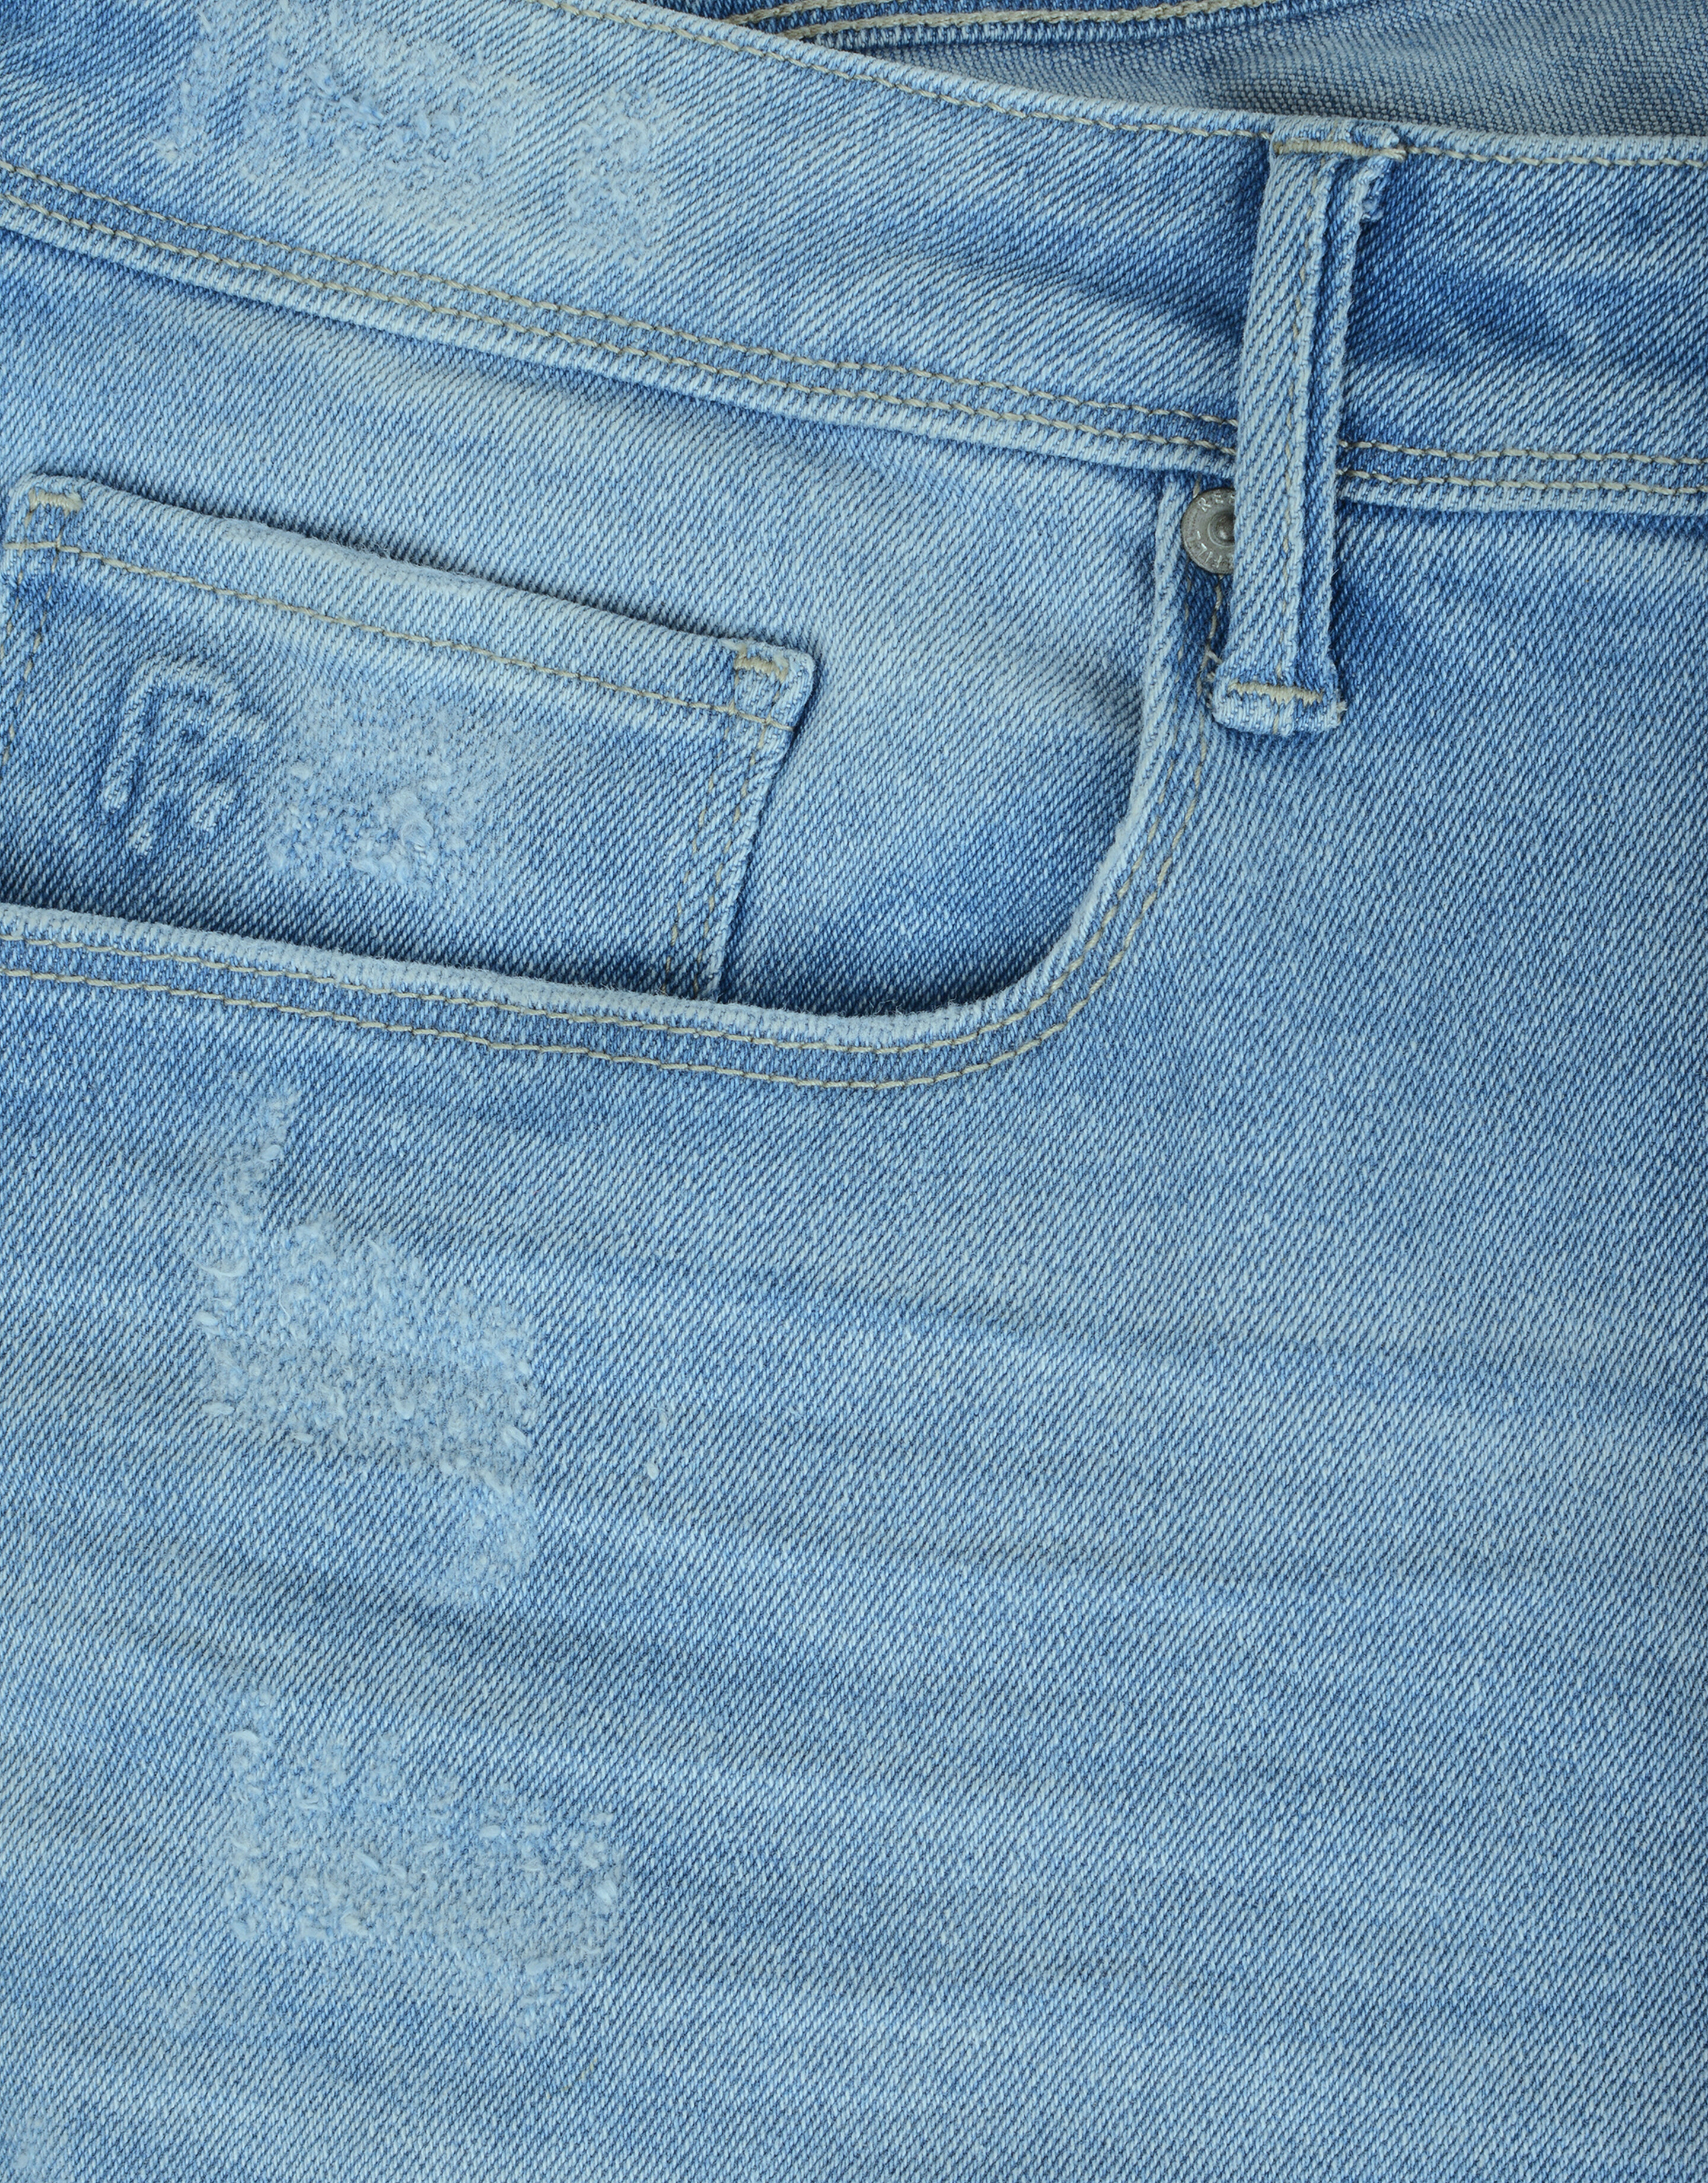 Hessel Denim Shorts | Refill